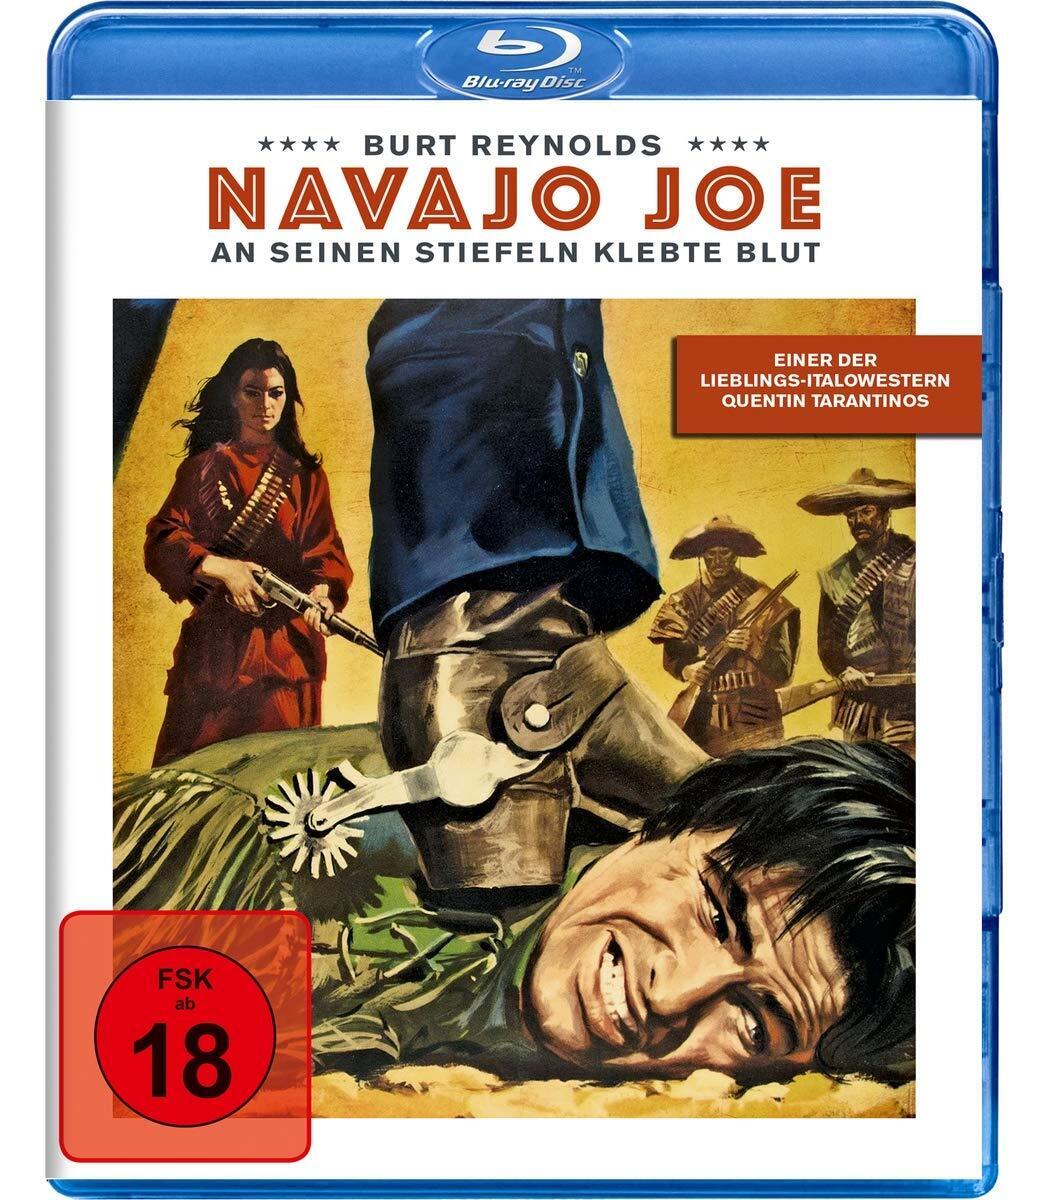 Navajo Joe - An seinen Stiefeln klebte Blut (Blu-ray) Reynolds Burt (UK IMPORT)